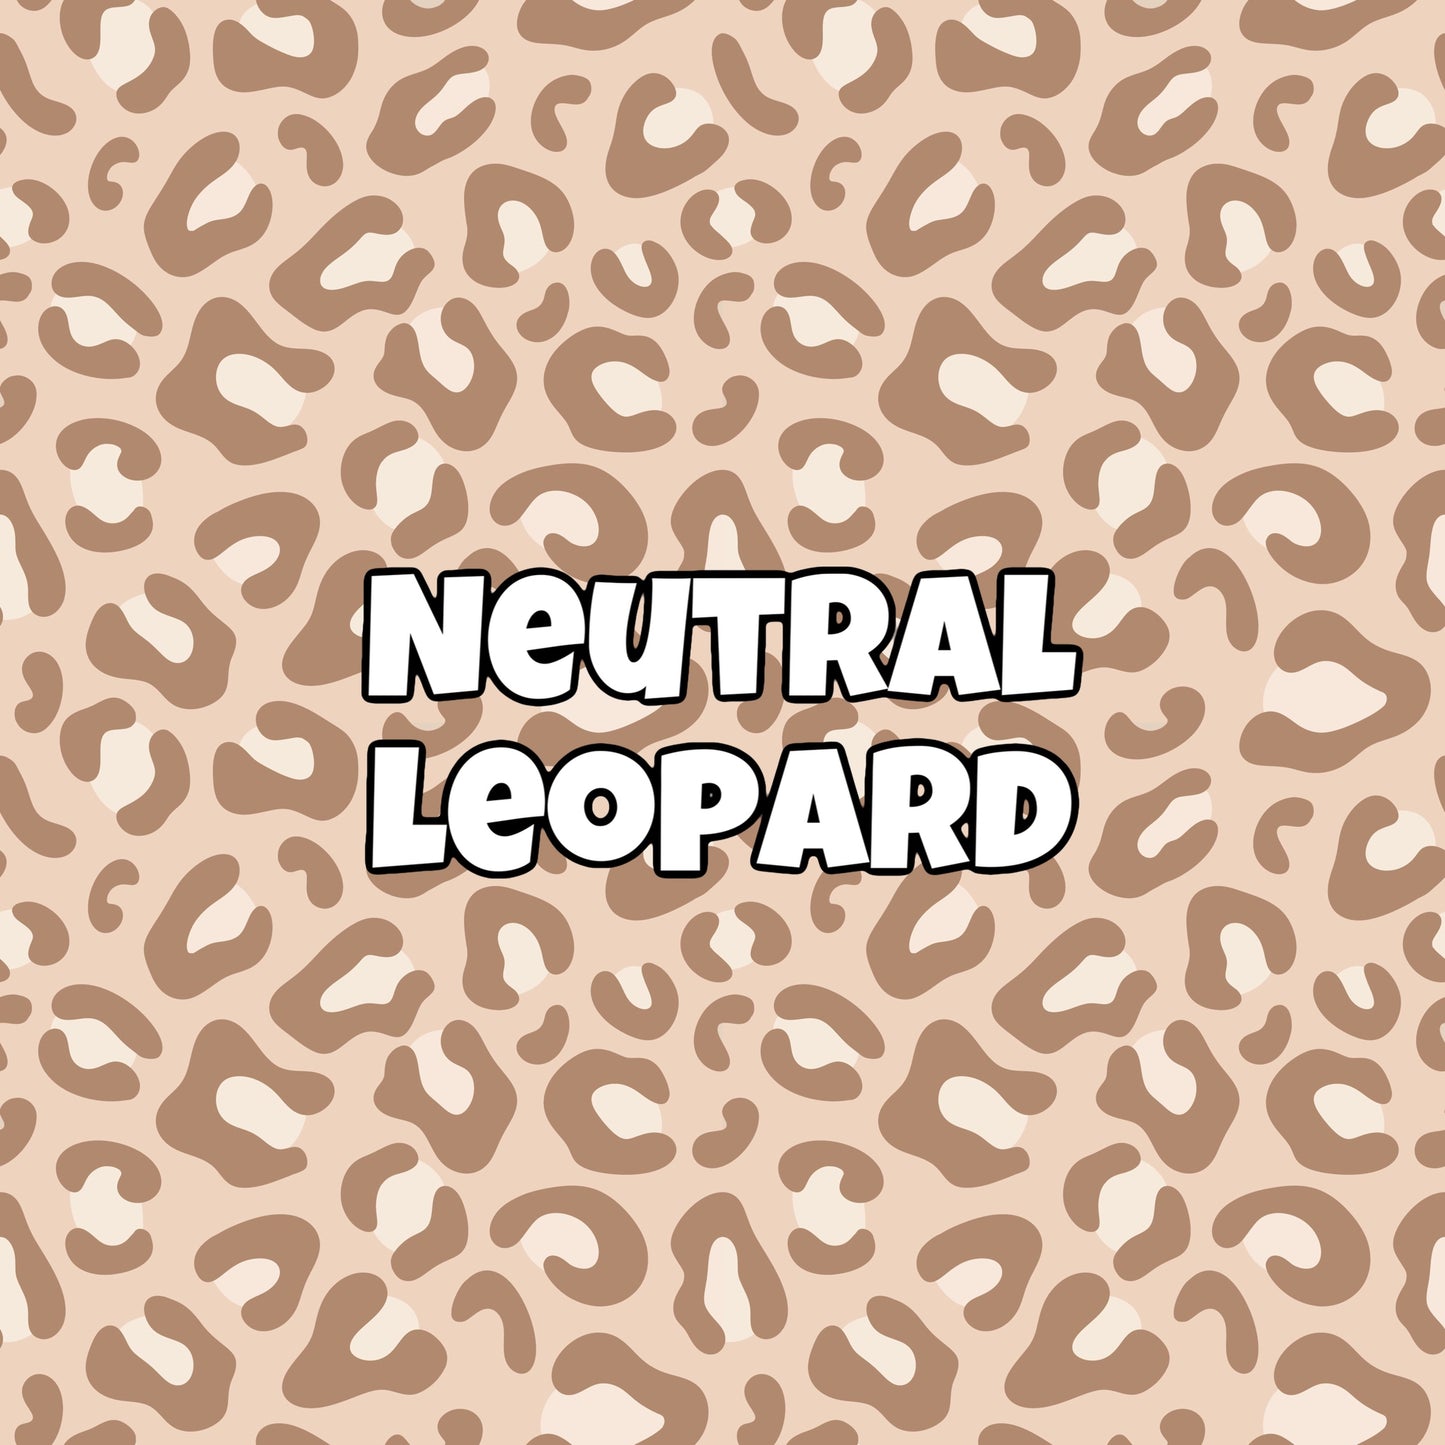 NEUTRAL LEOPARD